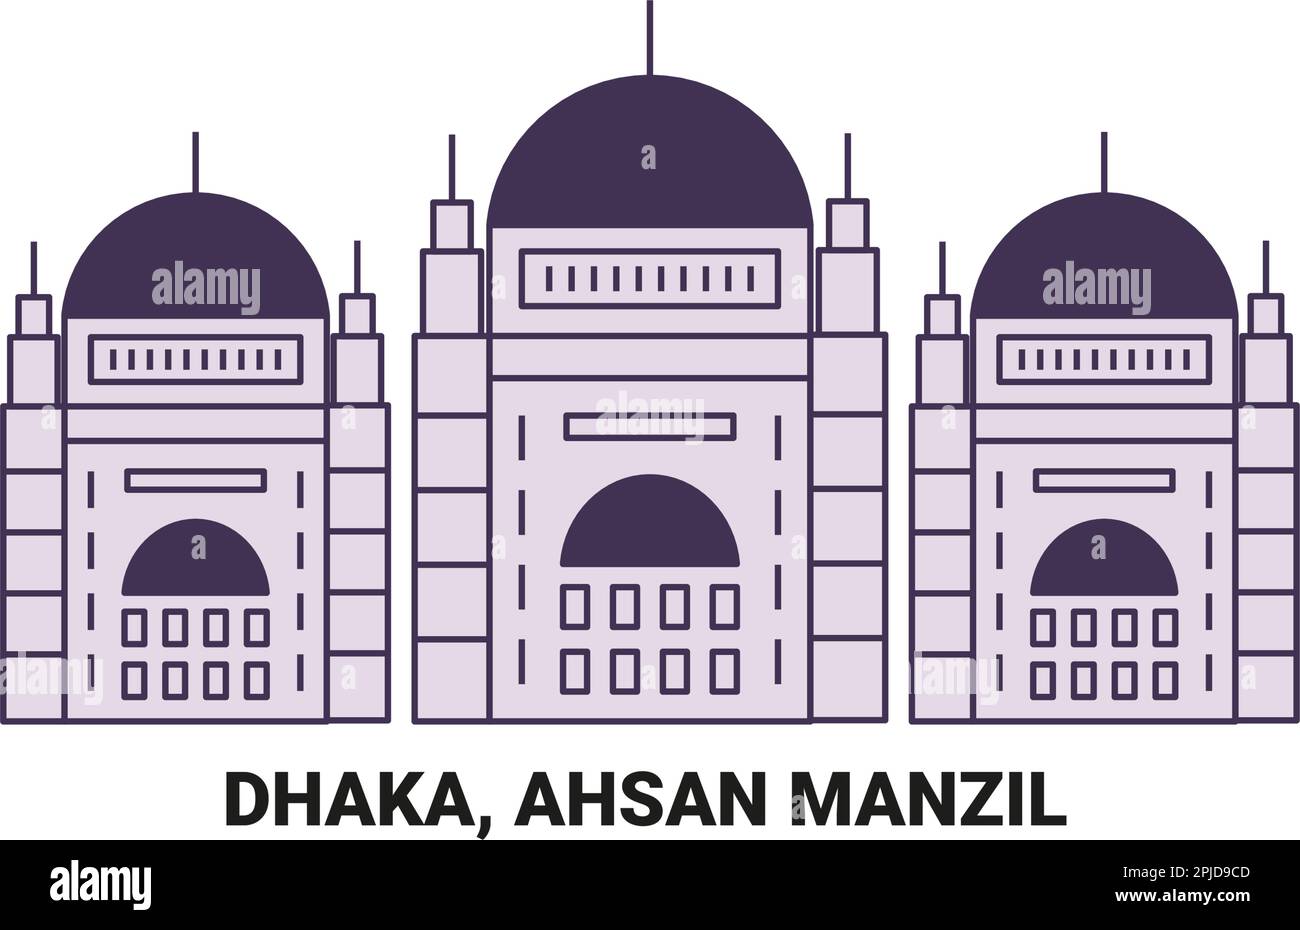 Bangladesh, Dhaka, Ahsan Manzil, travel landmark vector illustration Stock Vector